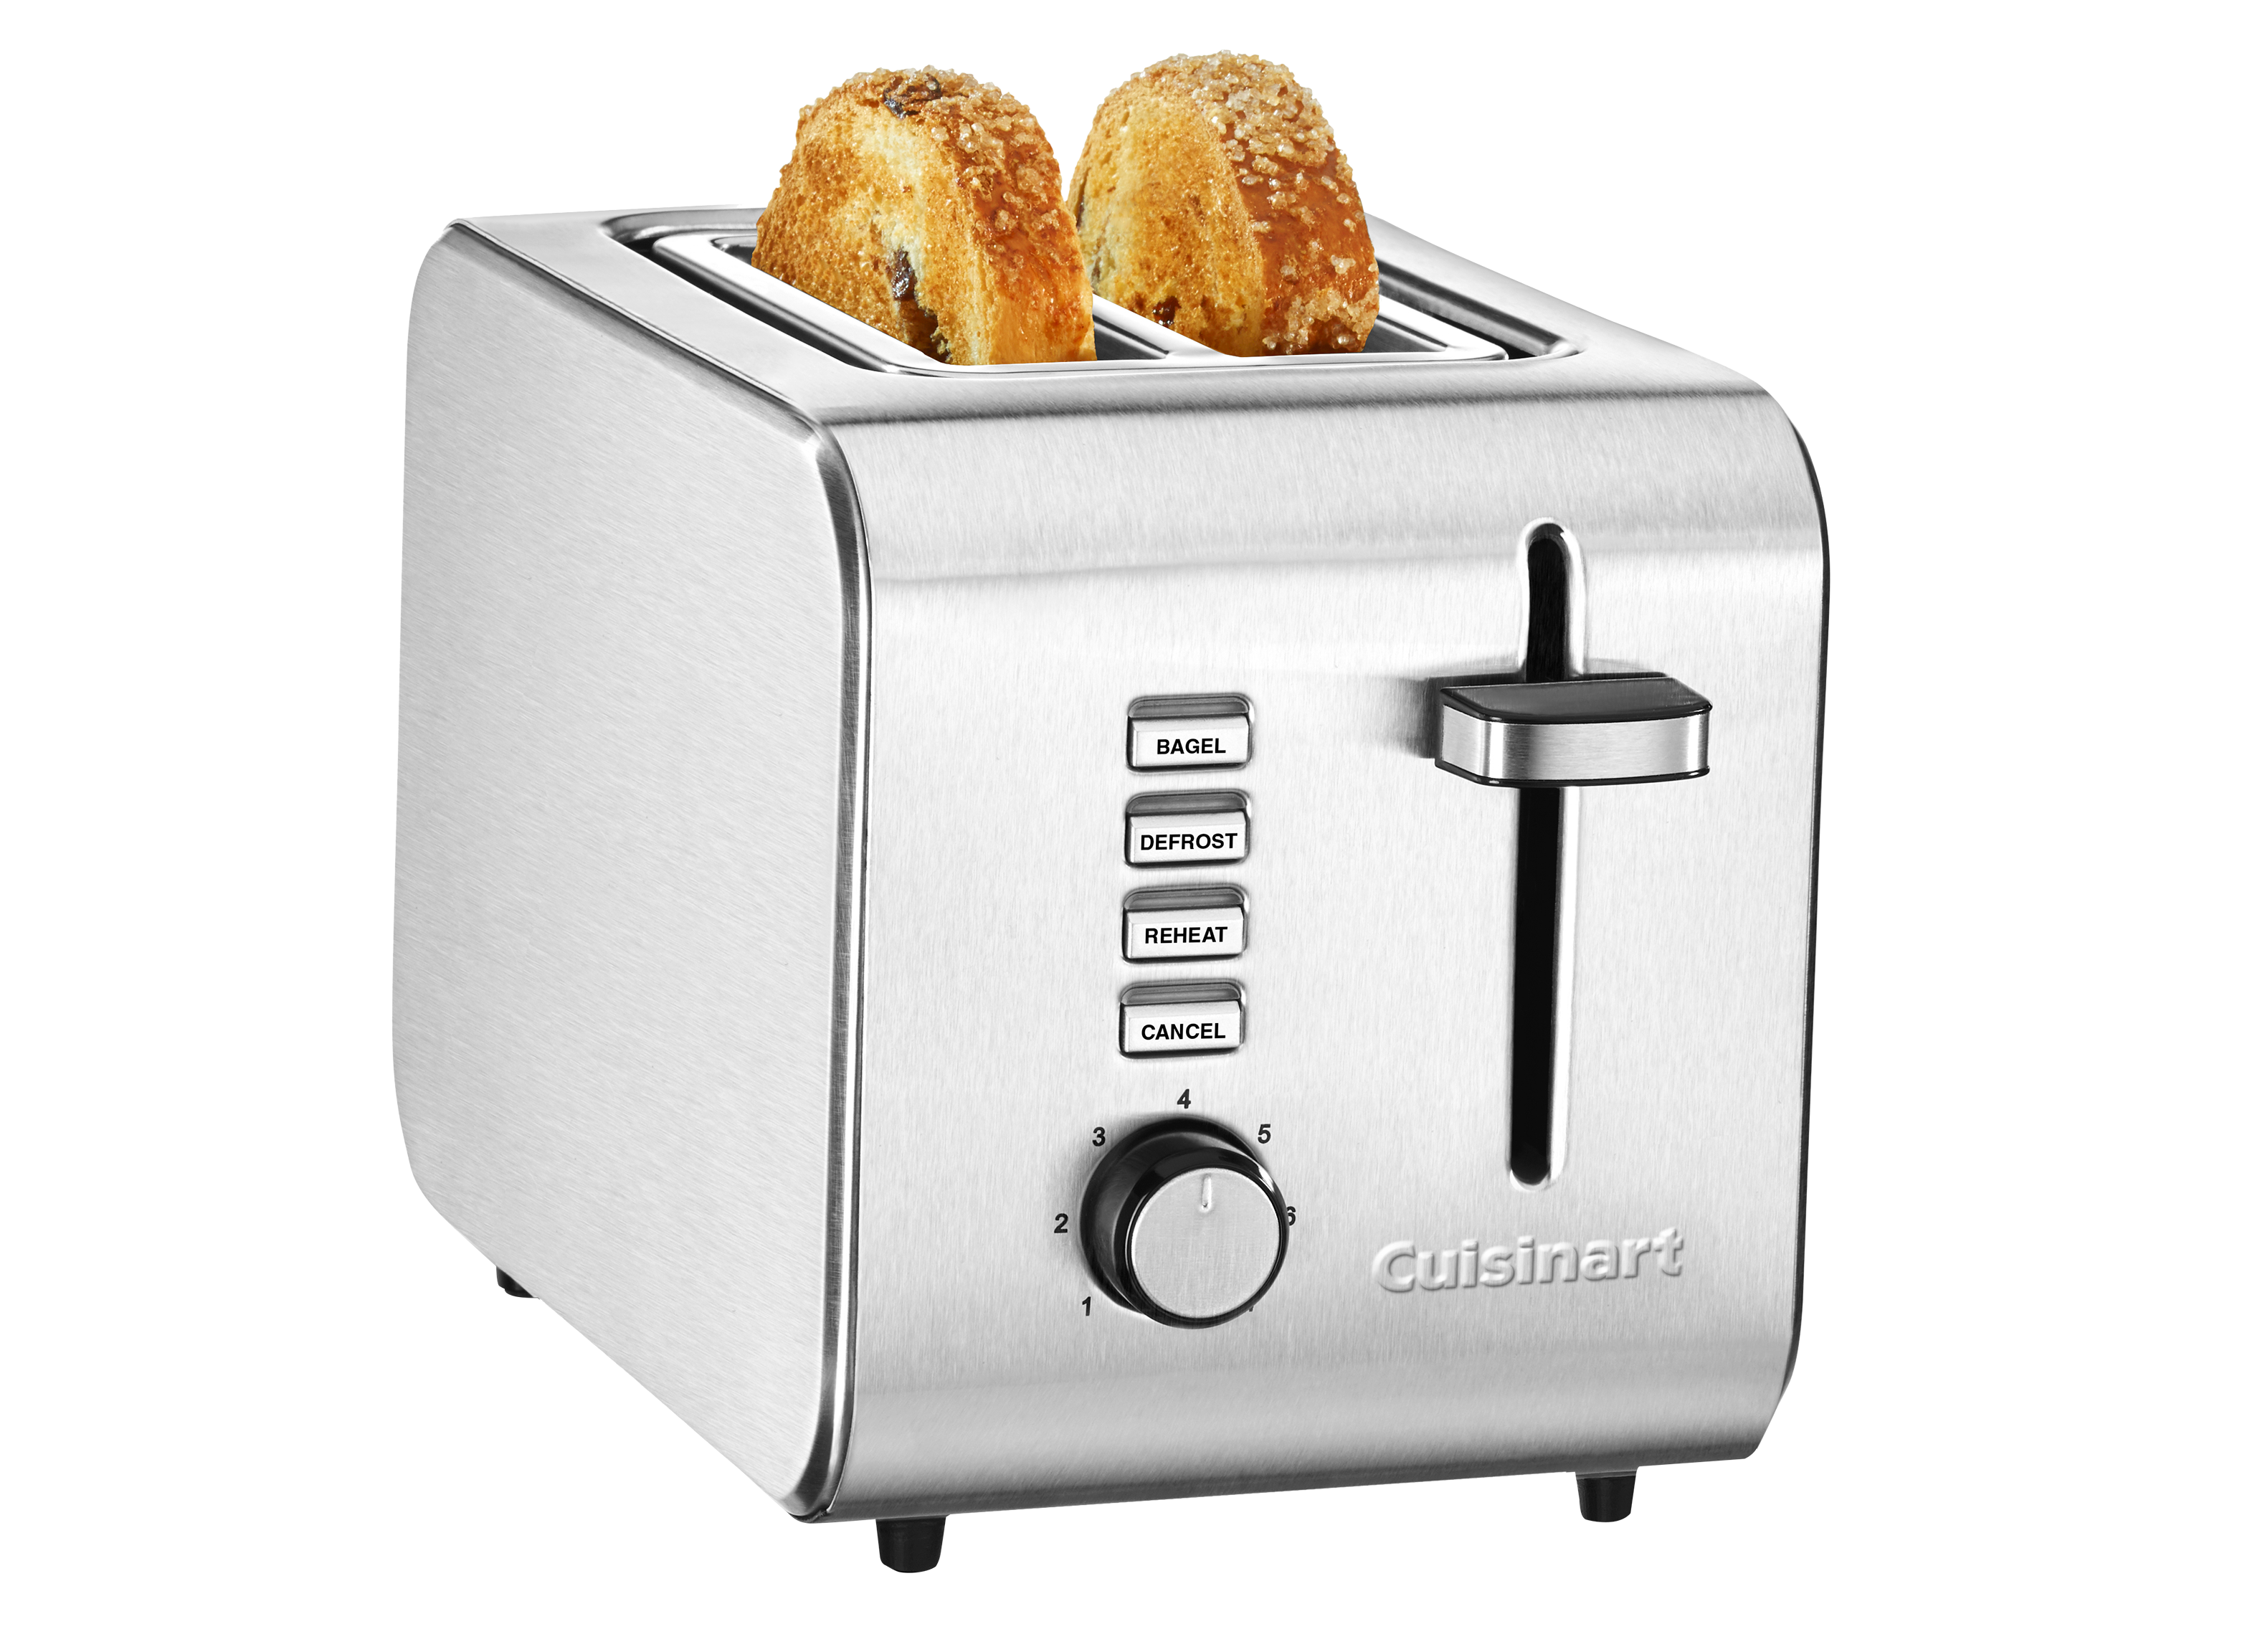 Cuisinart Commercial 2-Slice Toaster